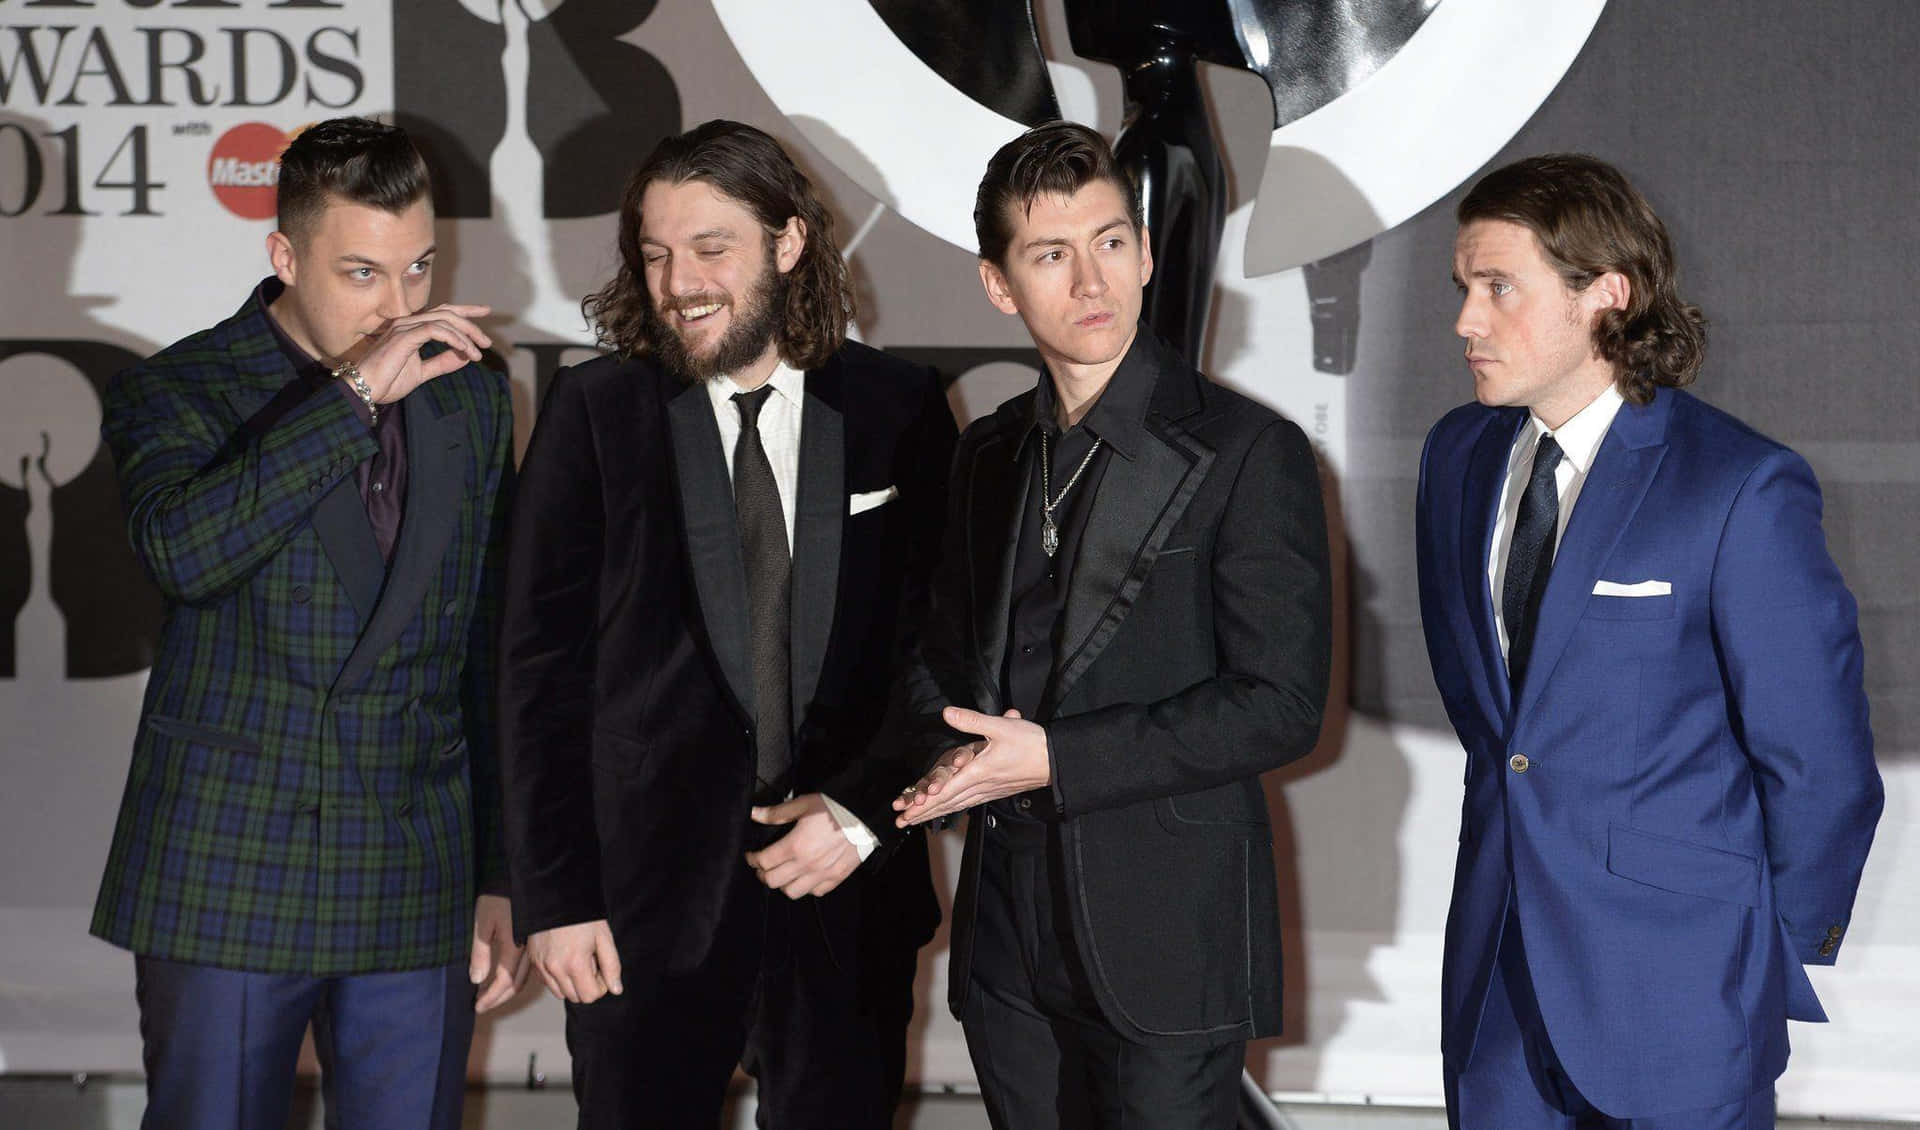 Arctic Monkeys B R I T Awards2014